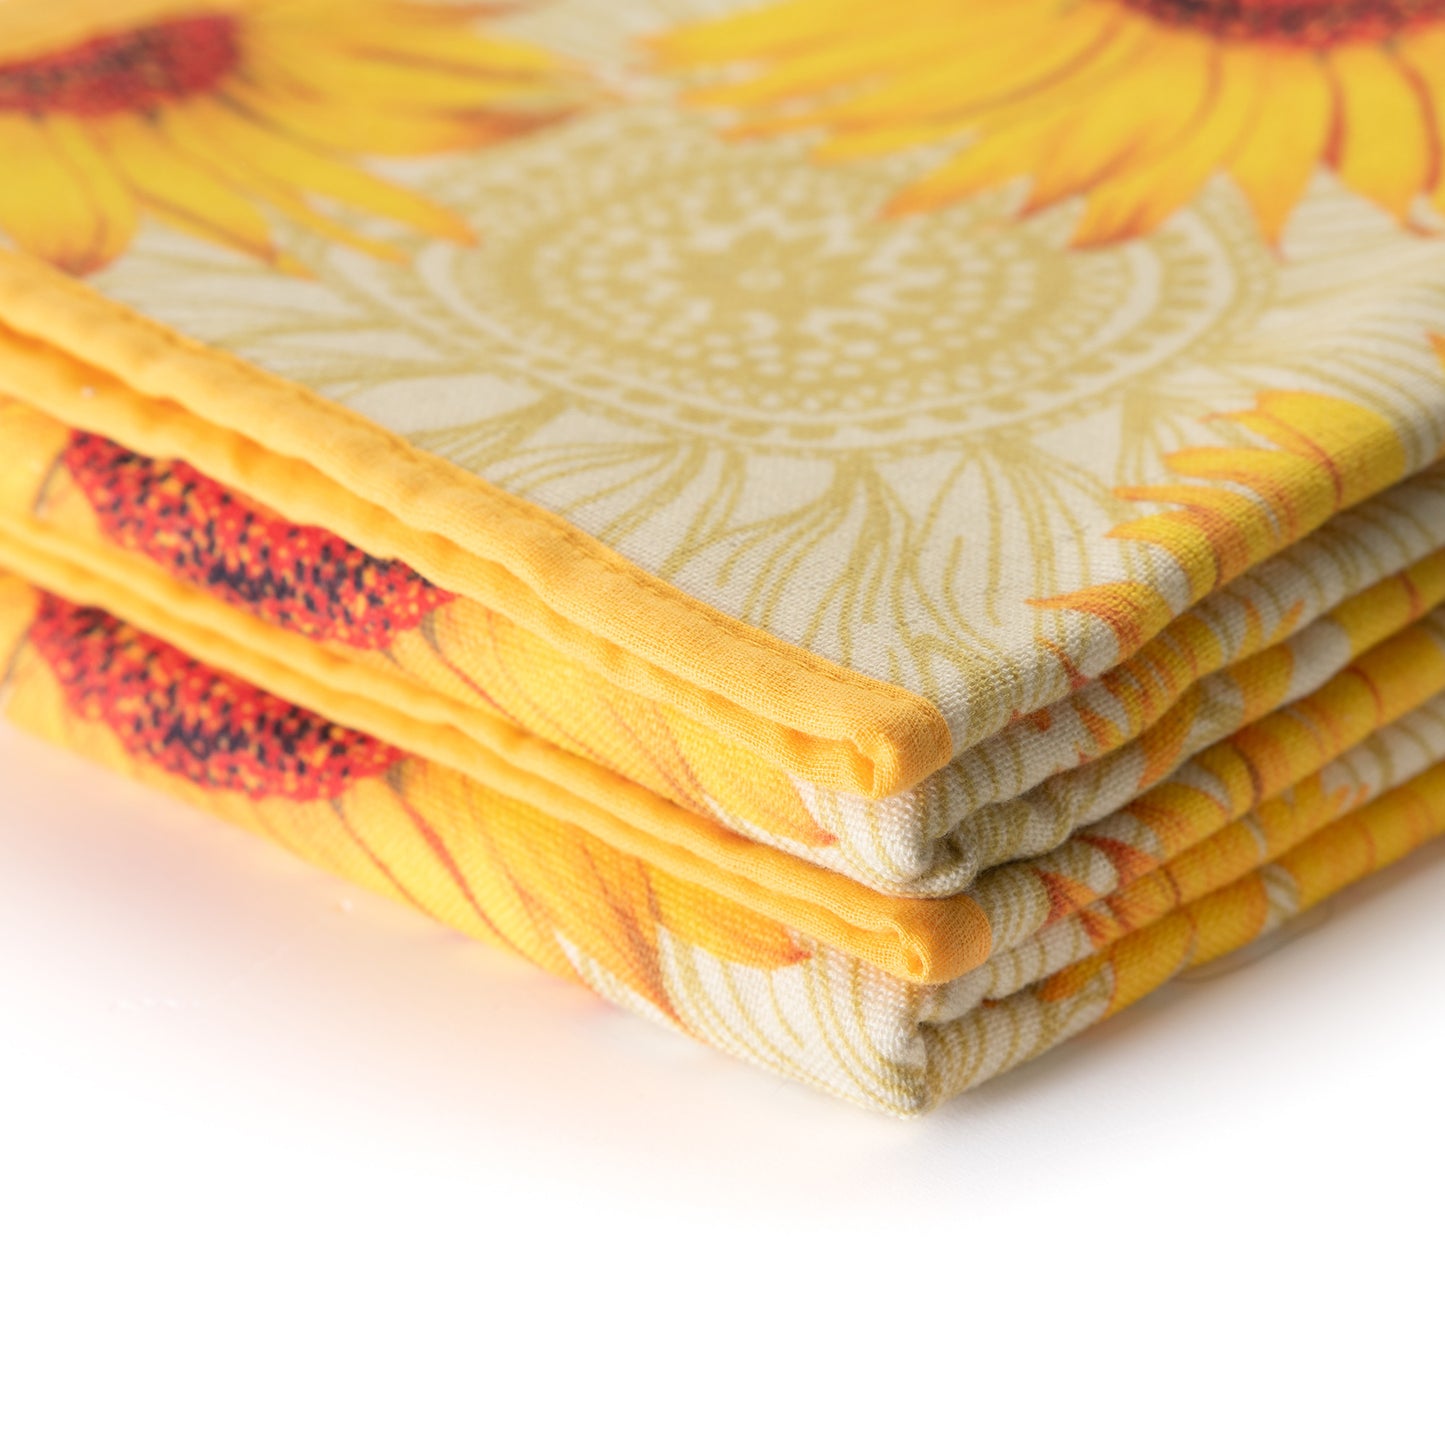 Summer Sunflowers Kitchen Towel Set